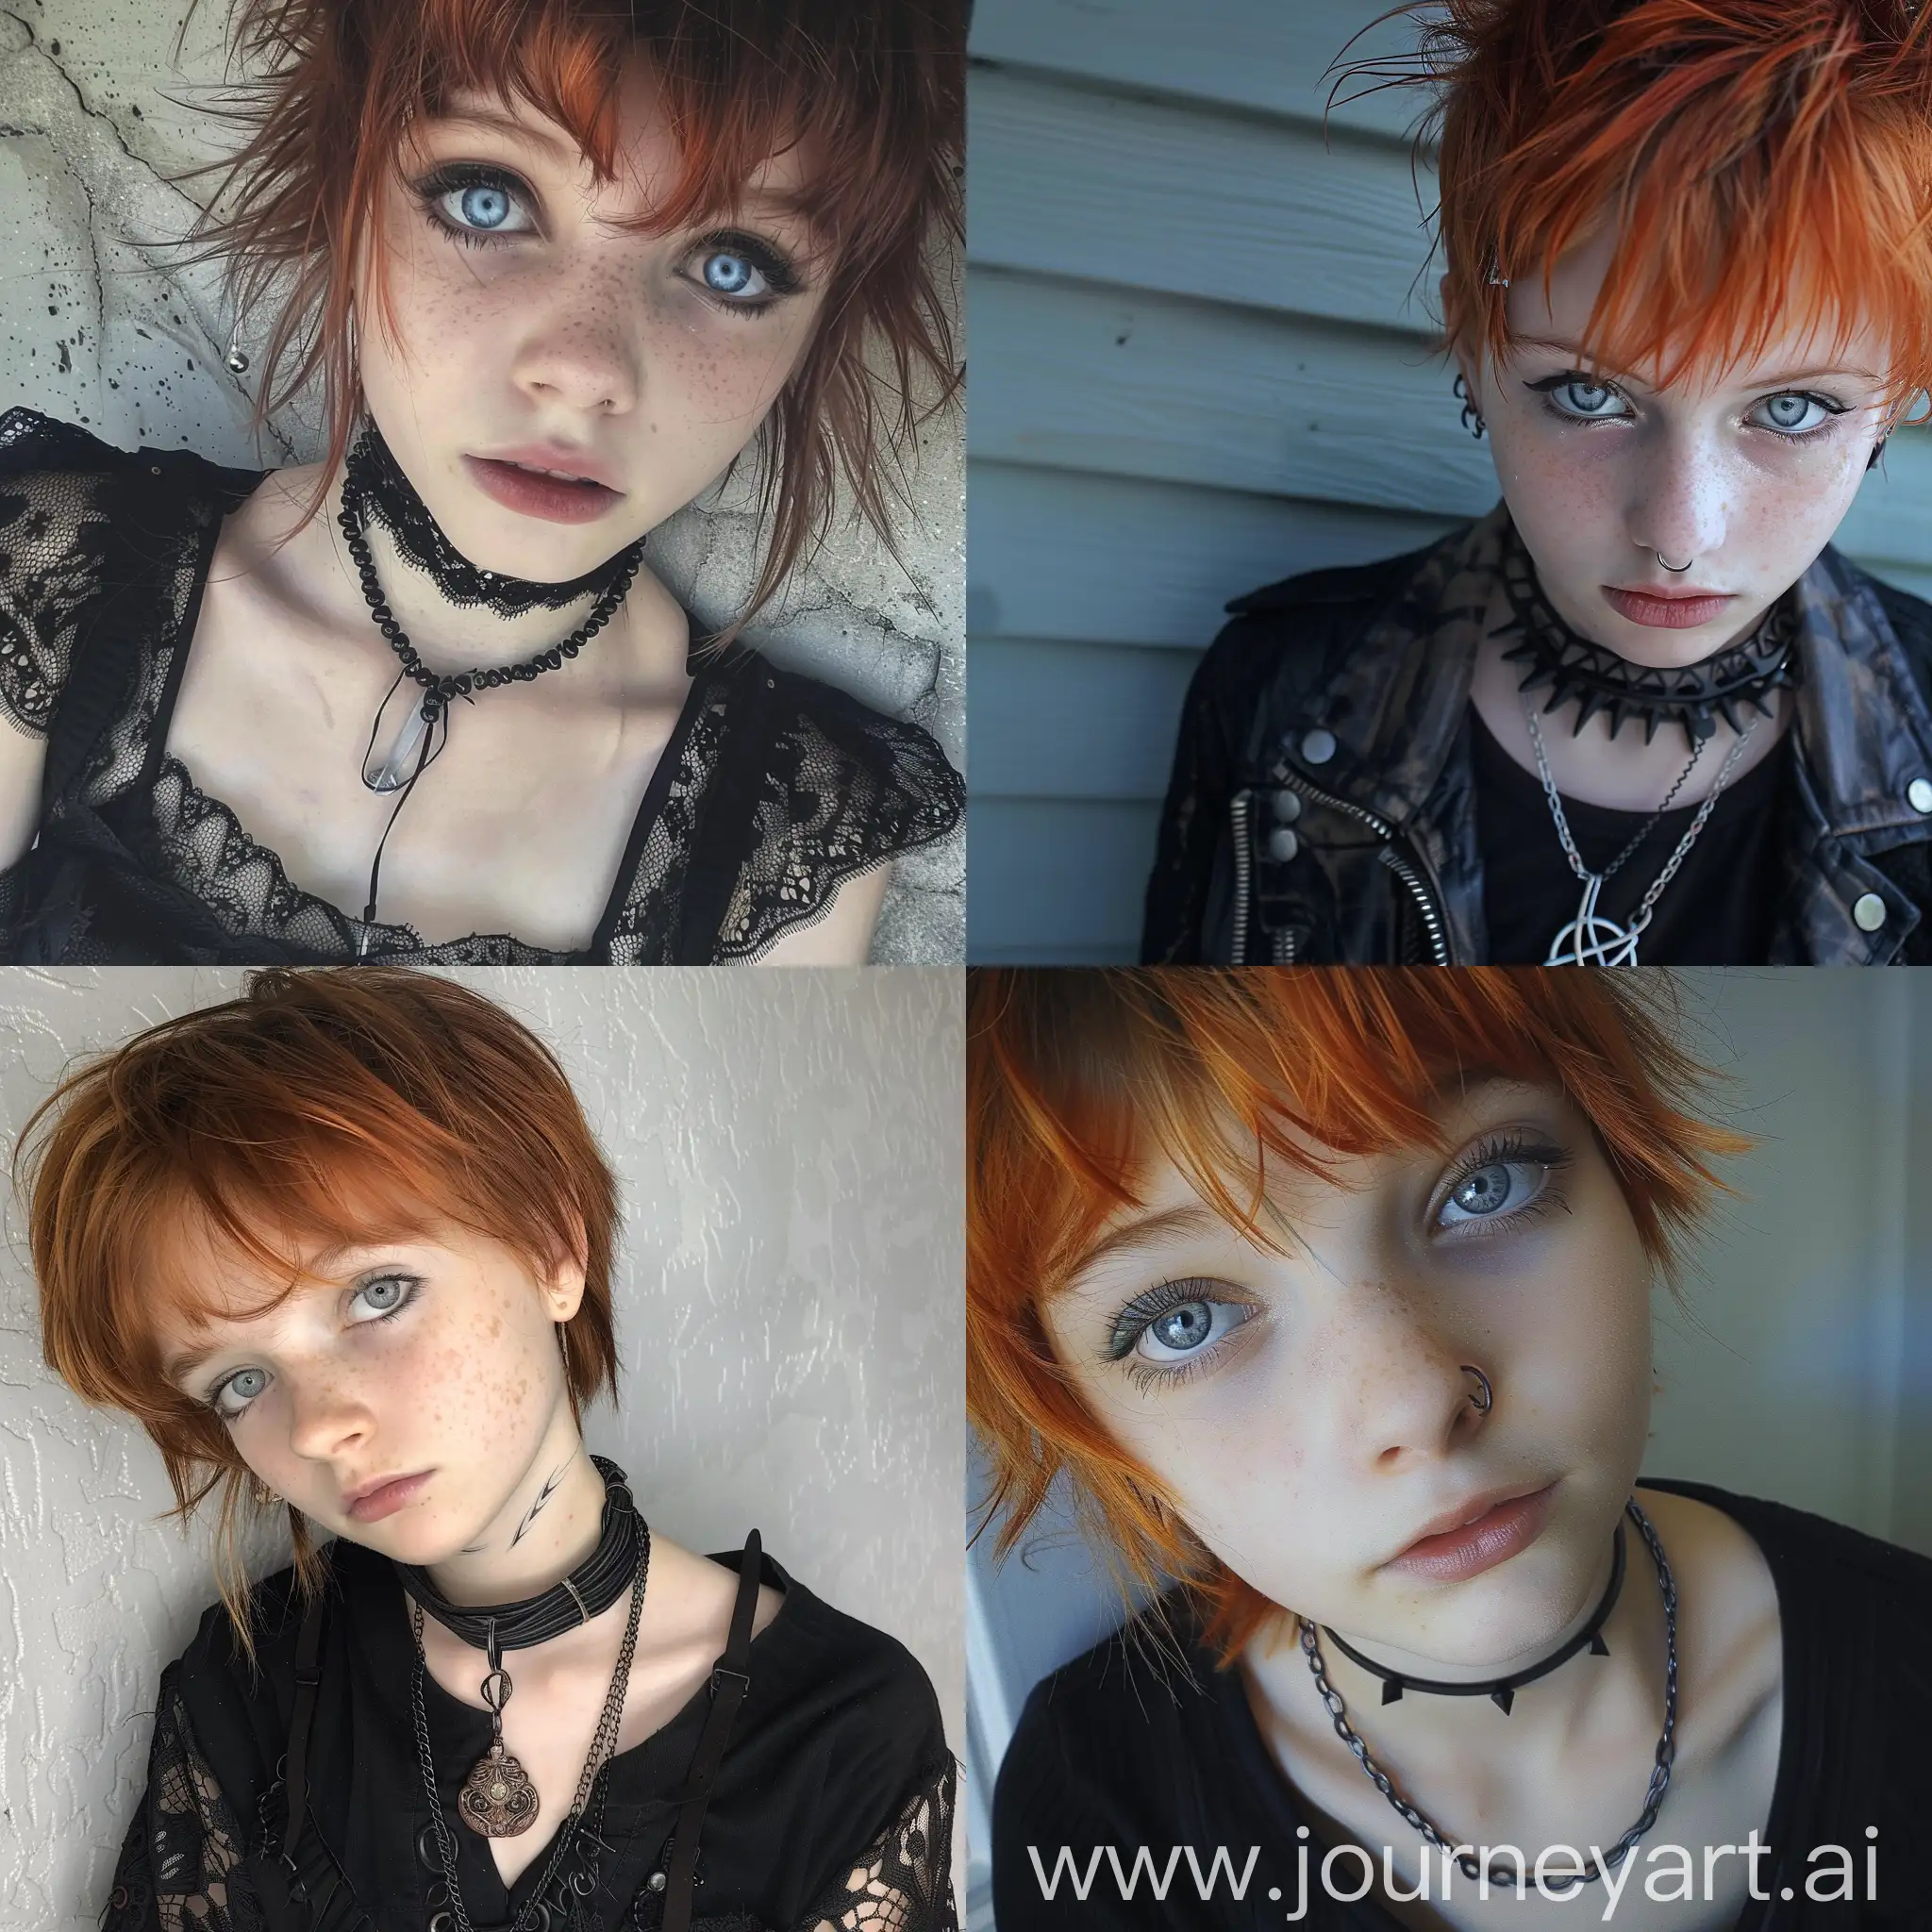 15 year old girl, goth, pixie cut, red hair, icy blue eyes